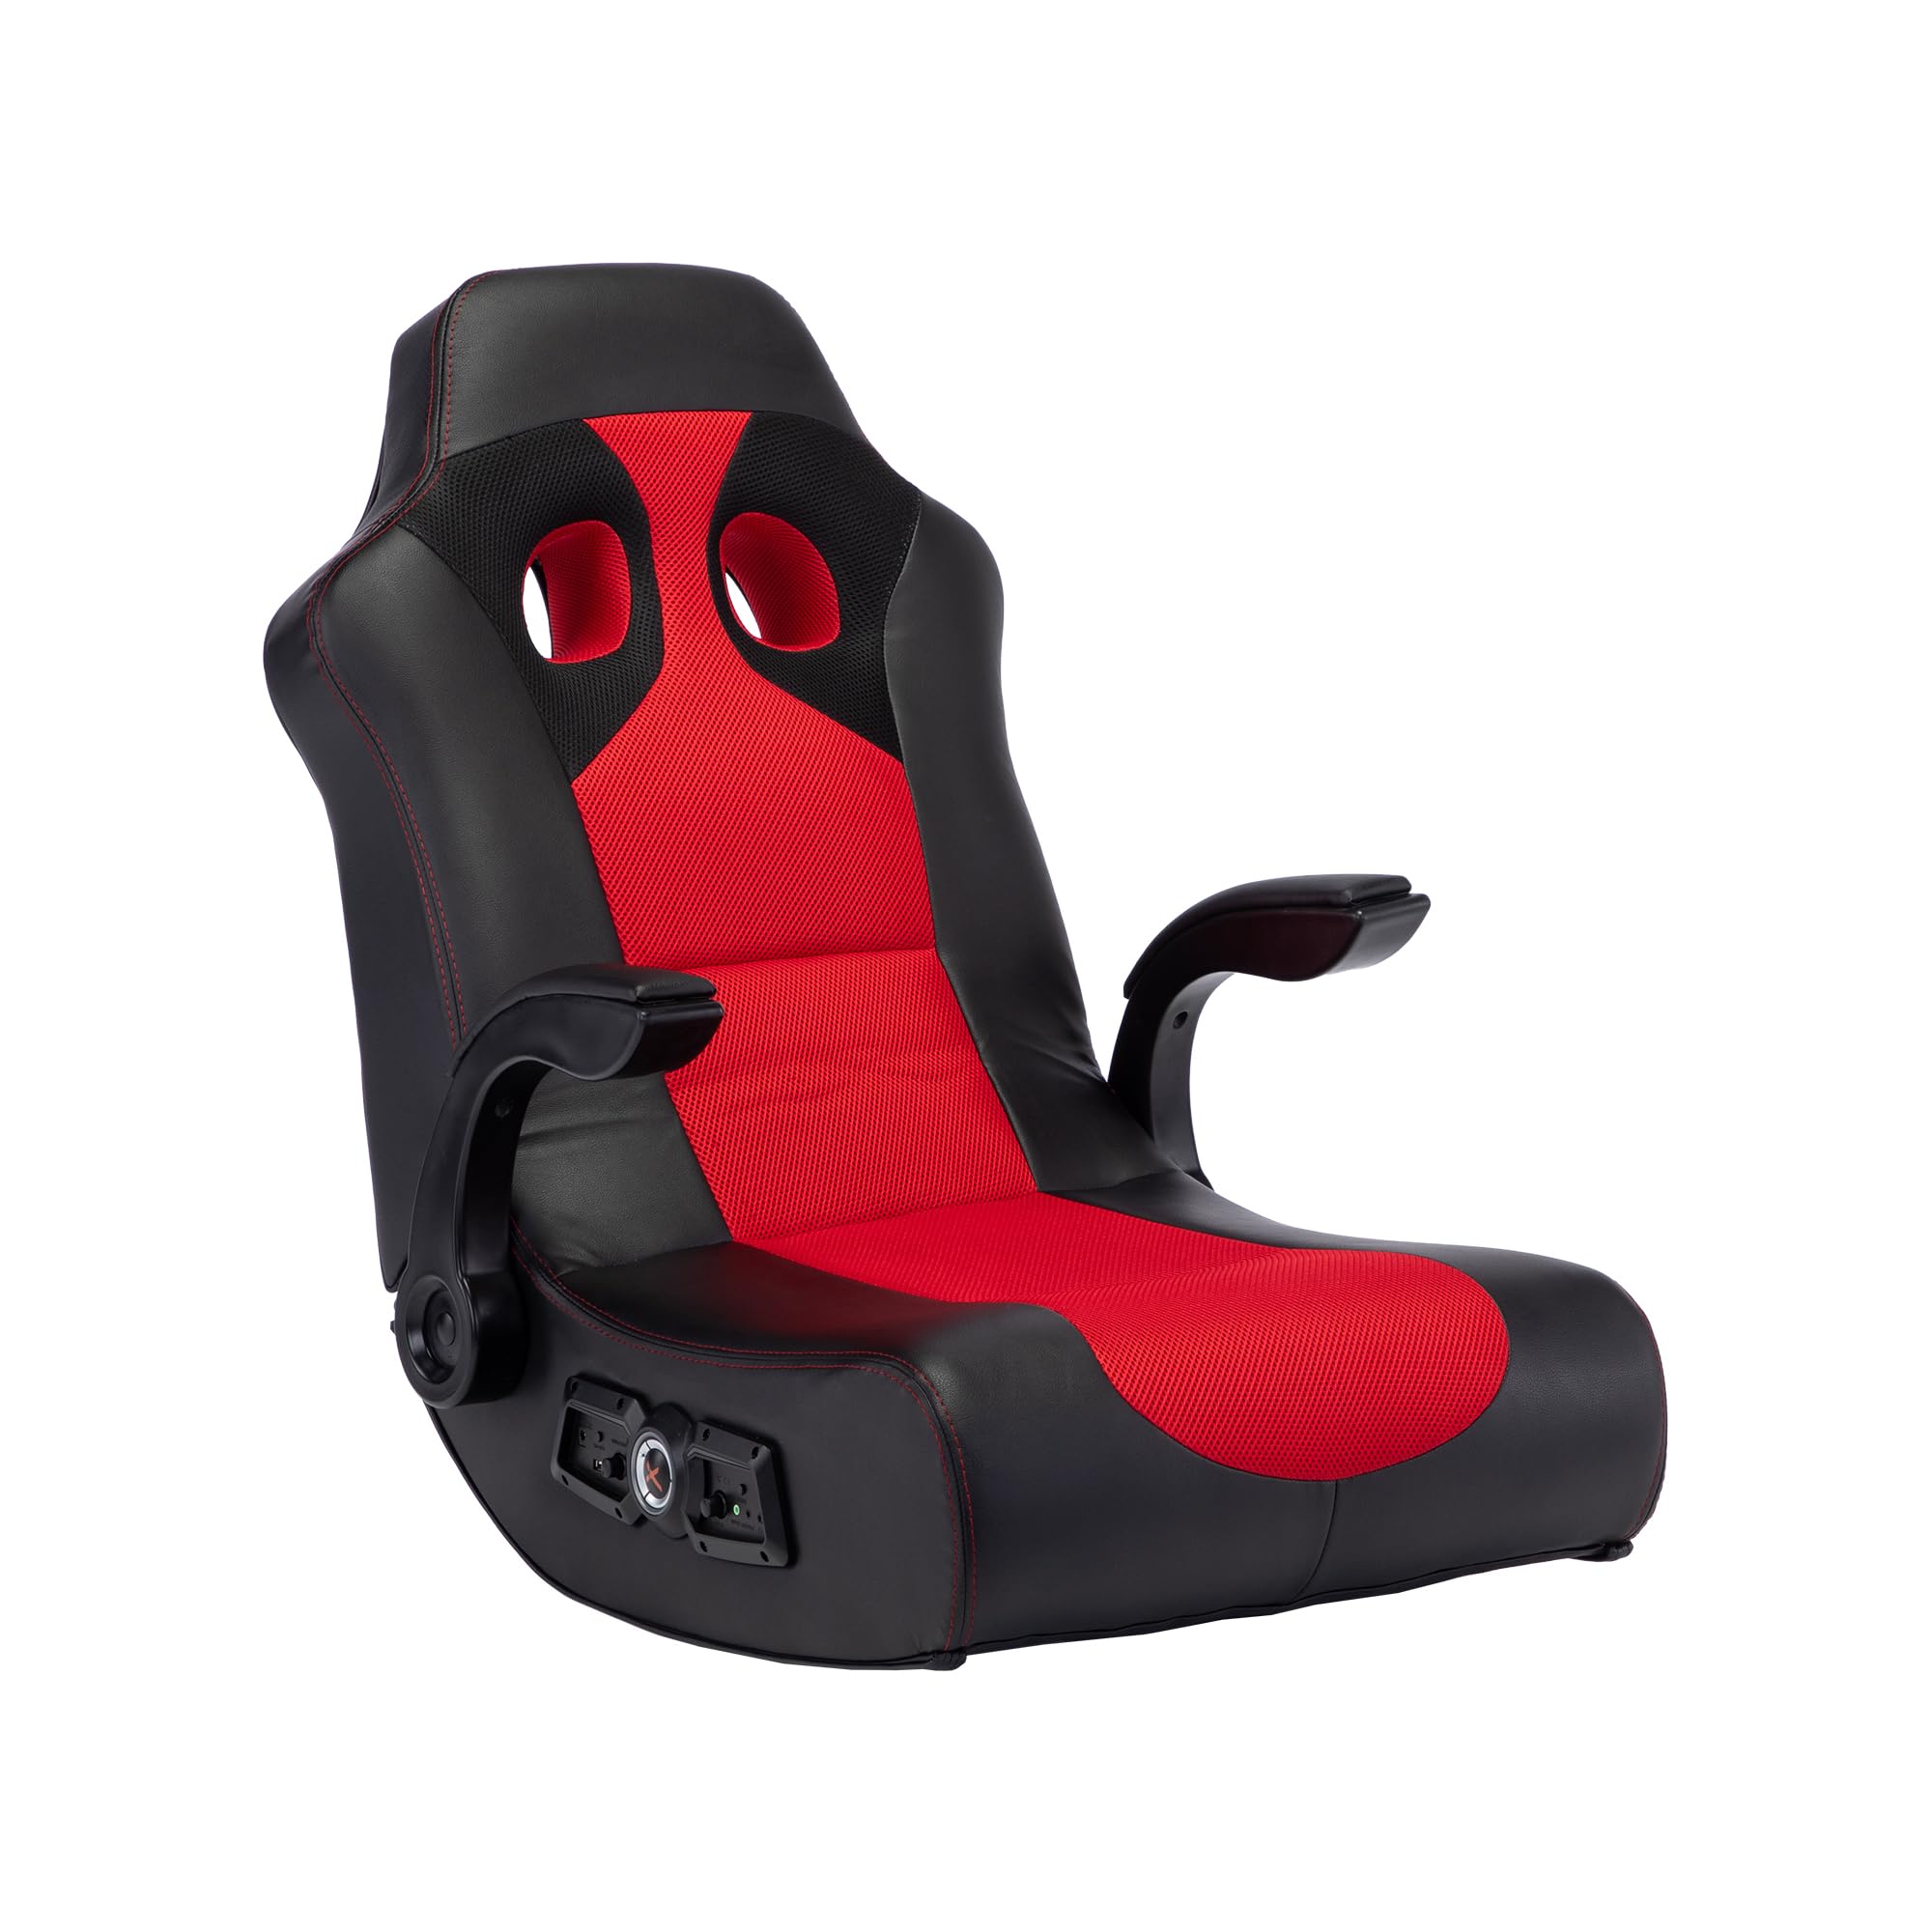 Ace Bayou X Rocker Ii Review One Stylish Seat 1700071124 